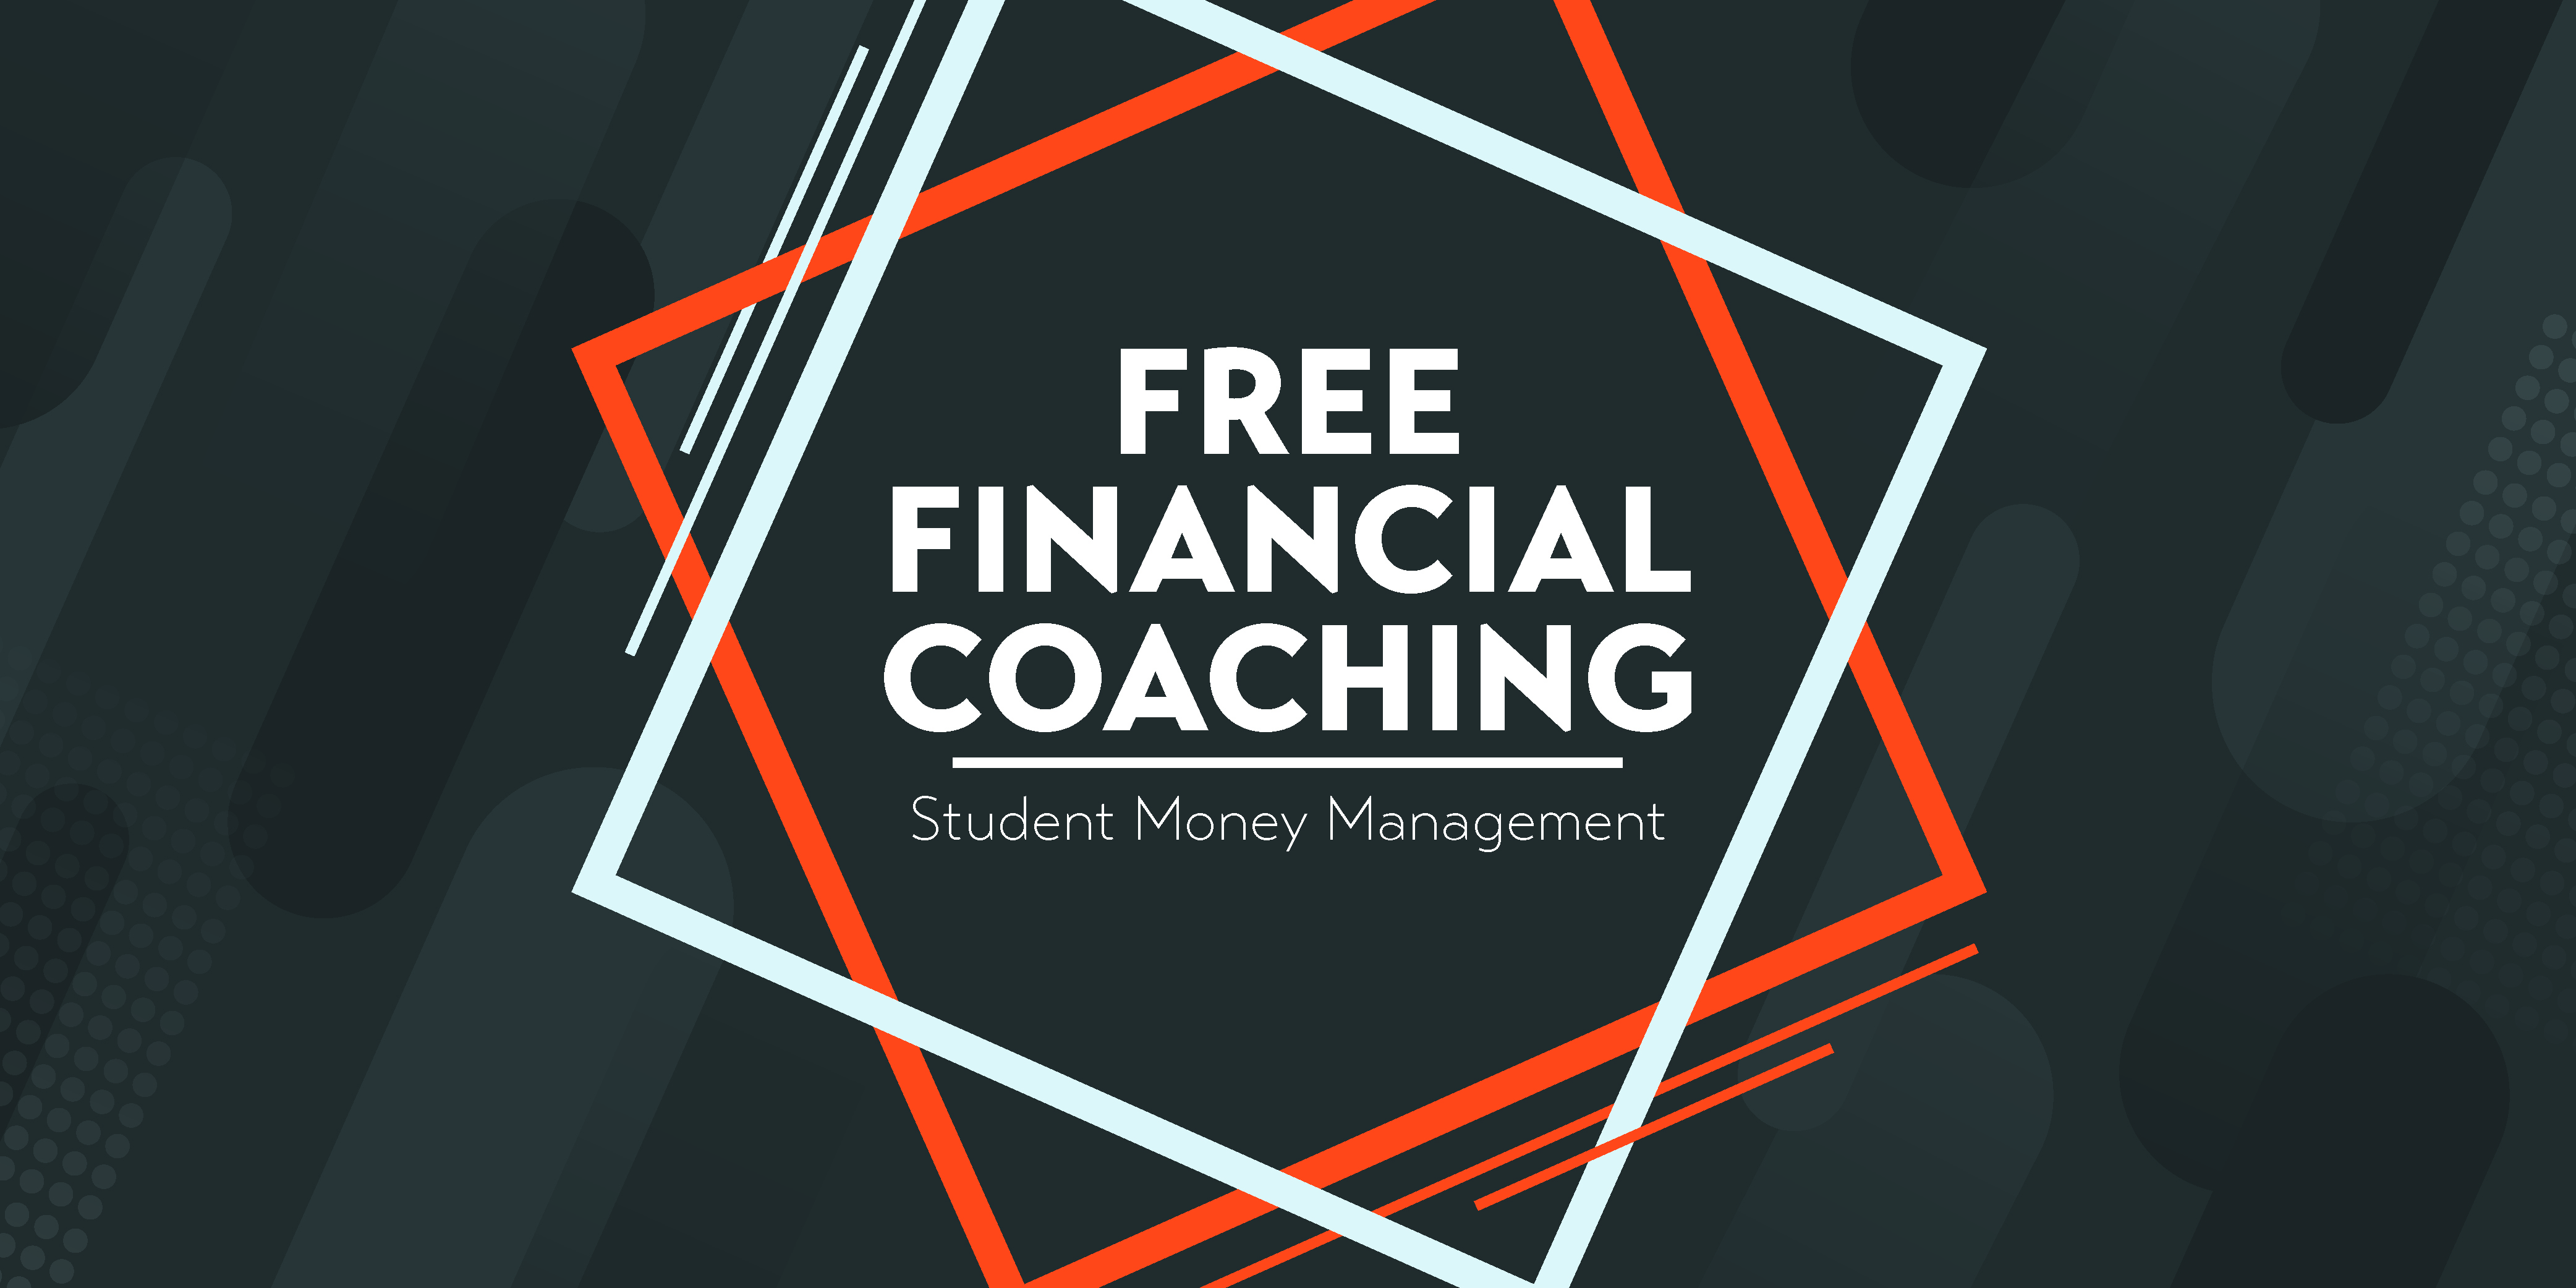 Student Money Management